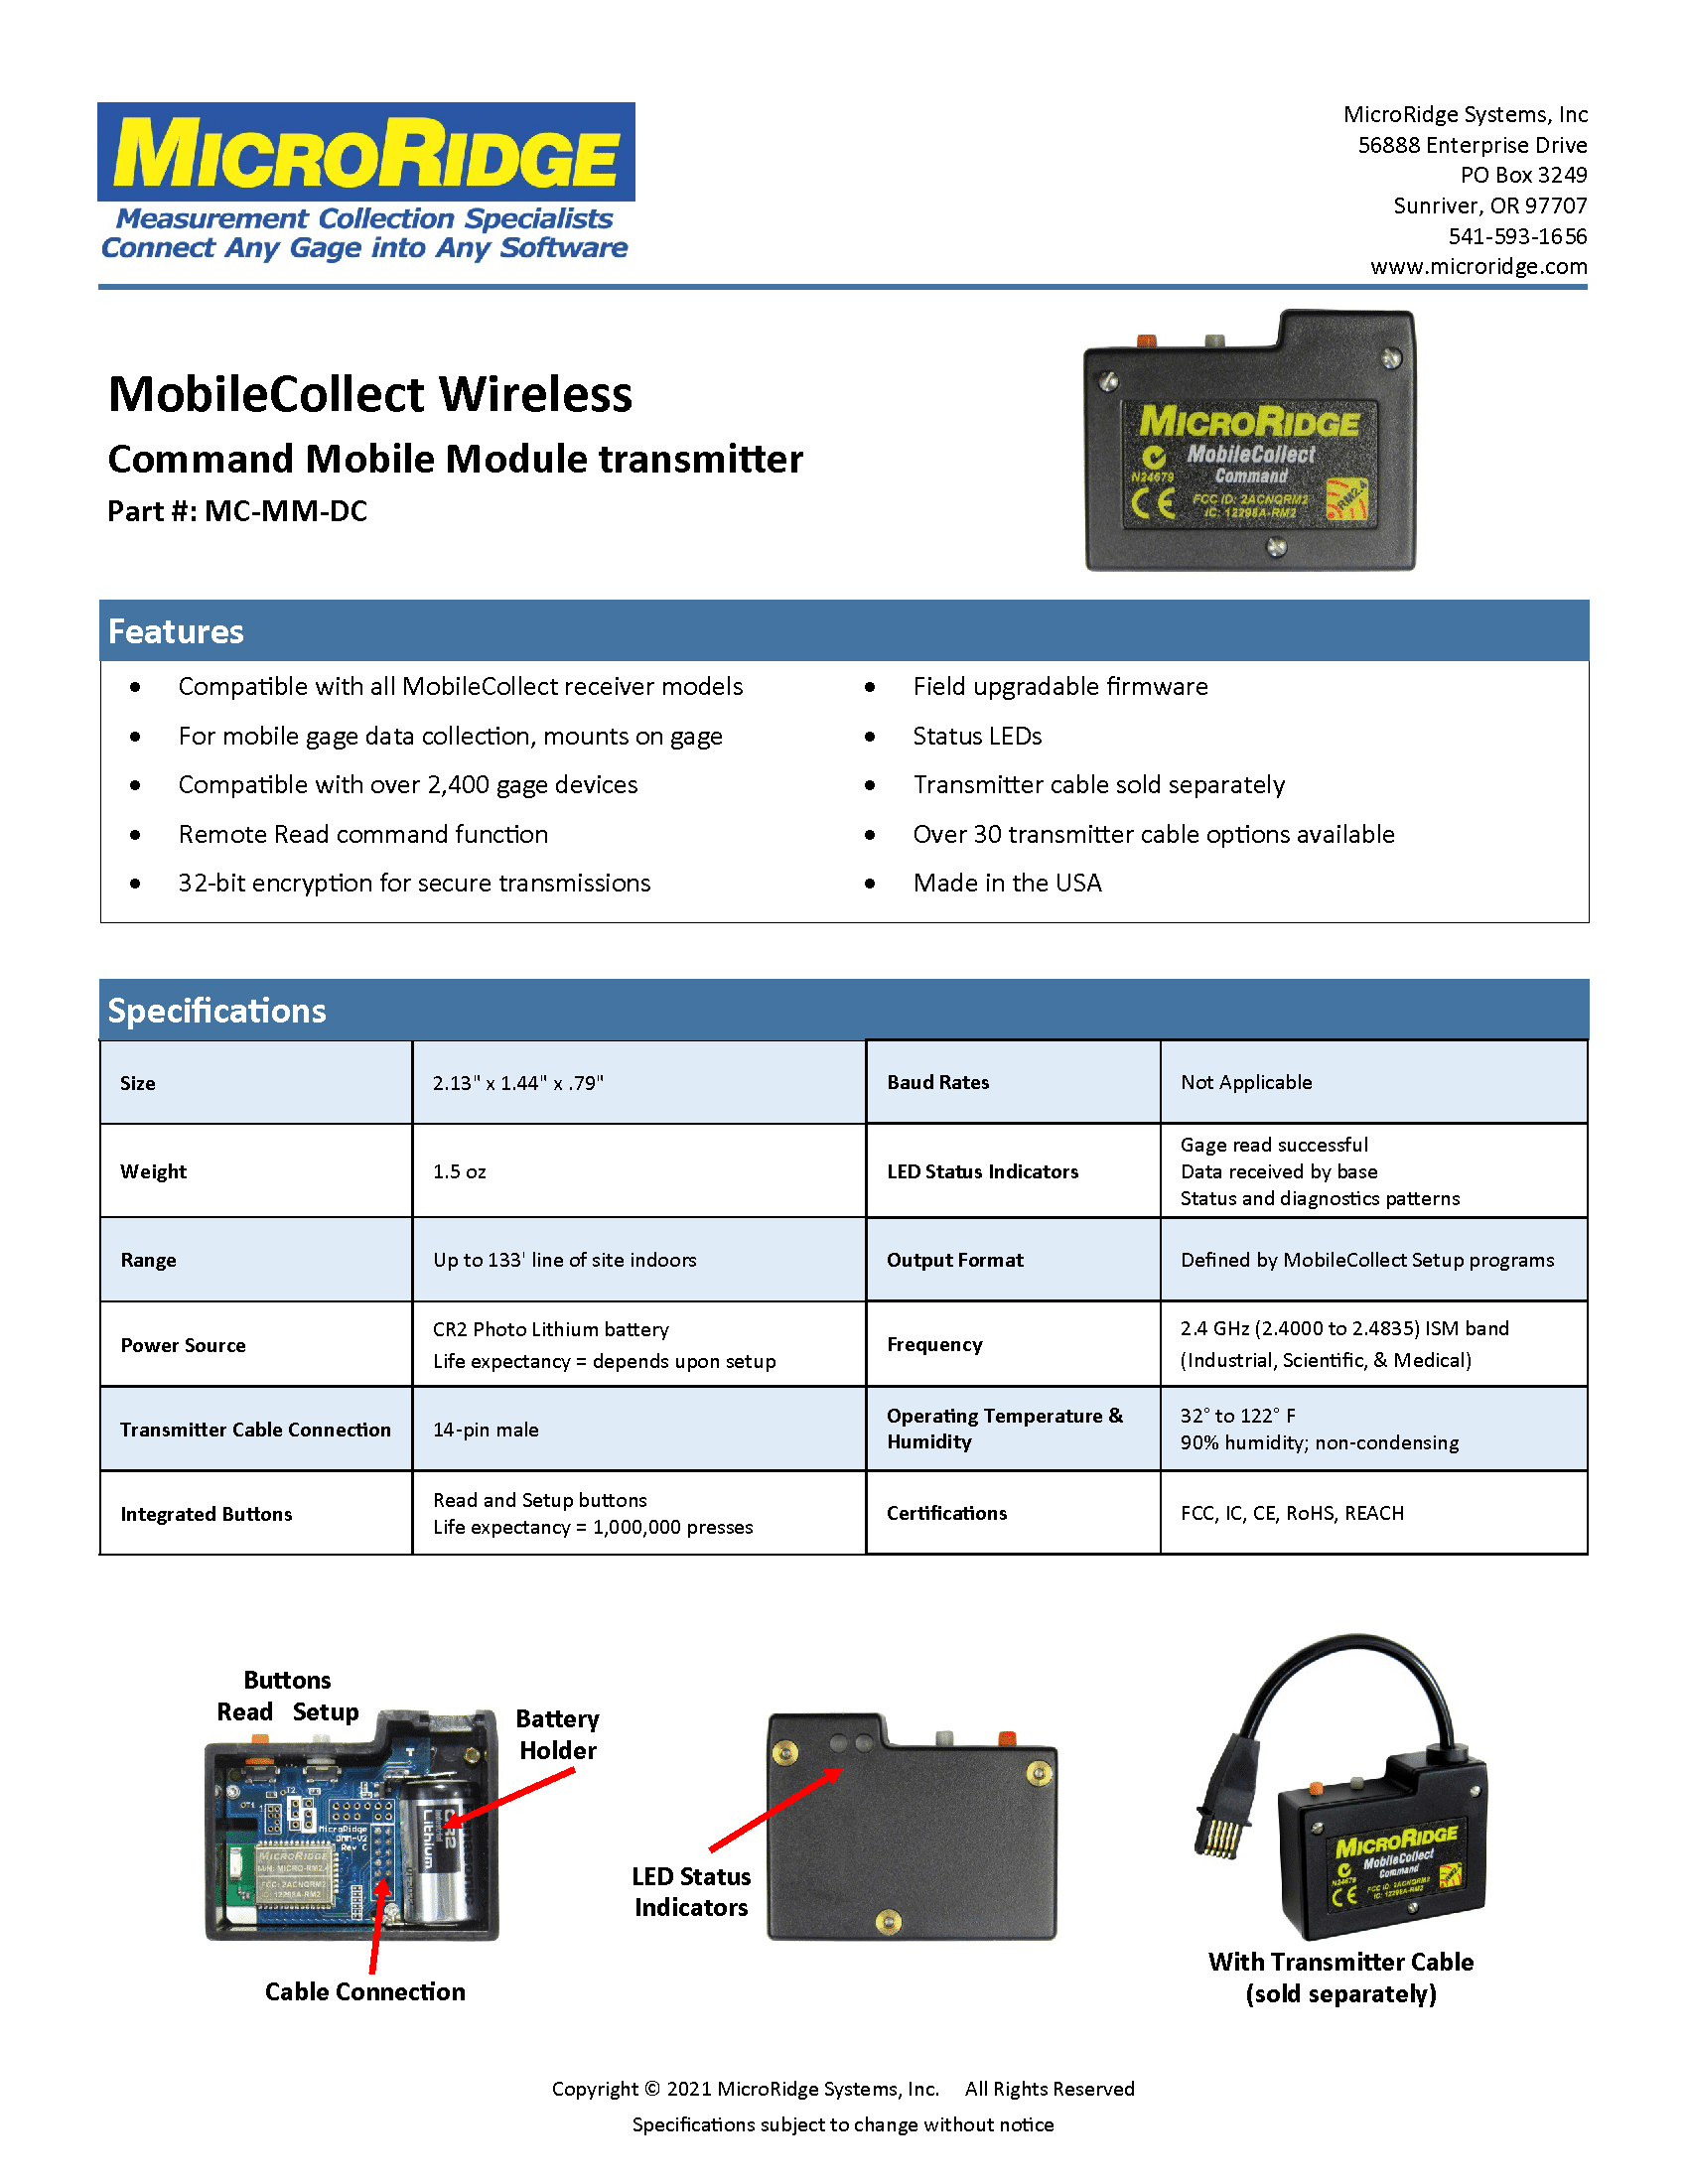 Command Mobile Module Spec Sheet